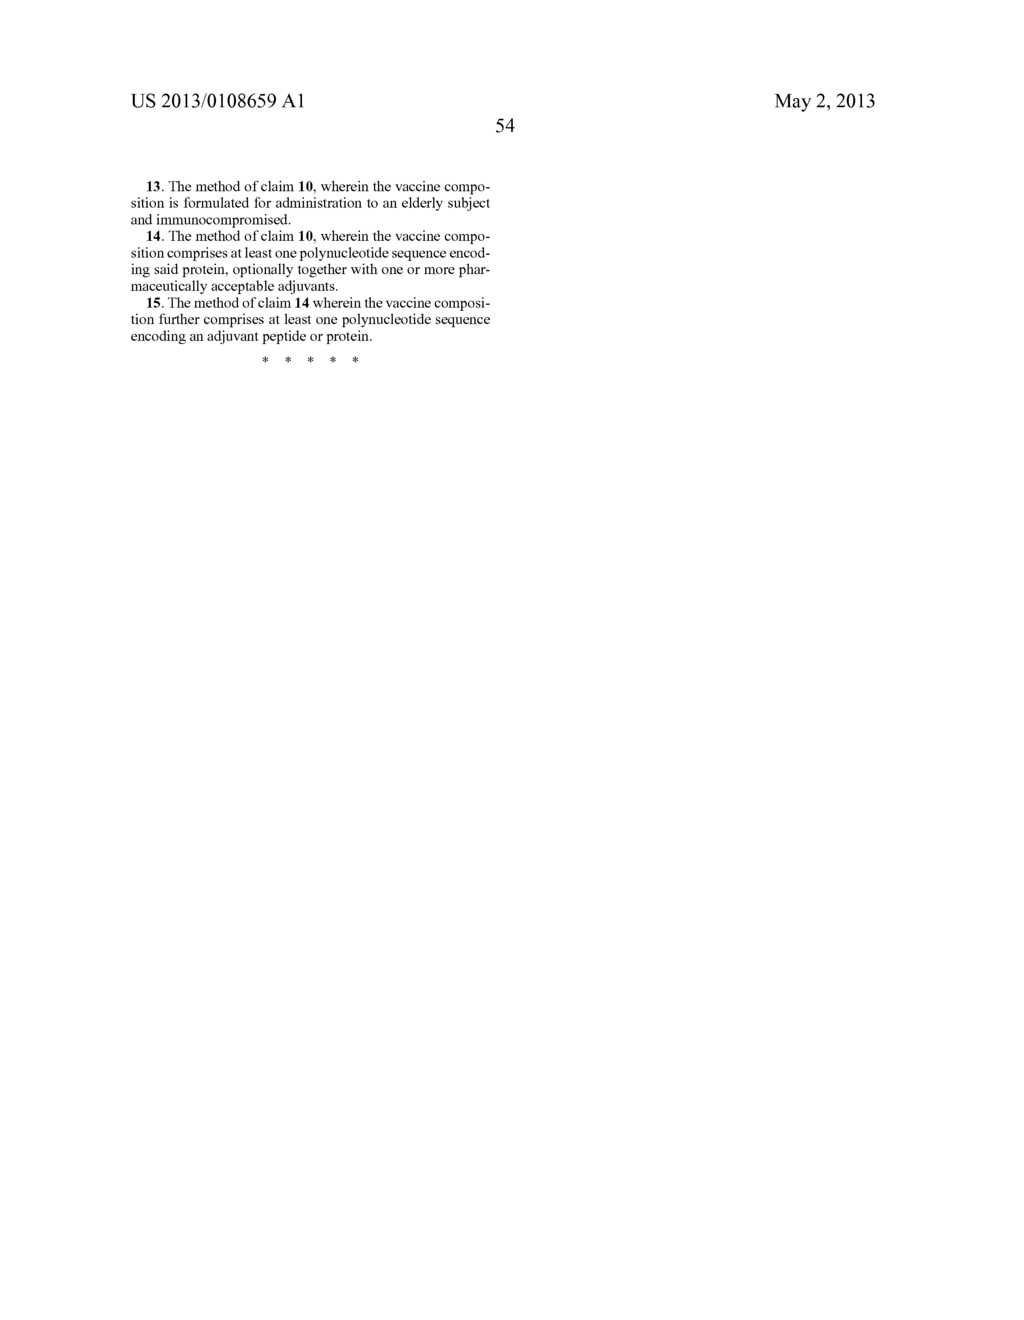 PROTEIN-BASED STREPTOCOCCUS PNEUMONIAE VACCINE - diagram, schematic, and image 67